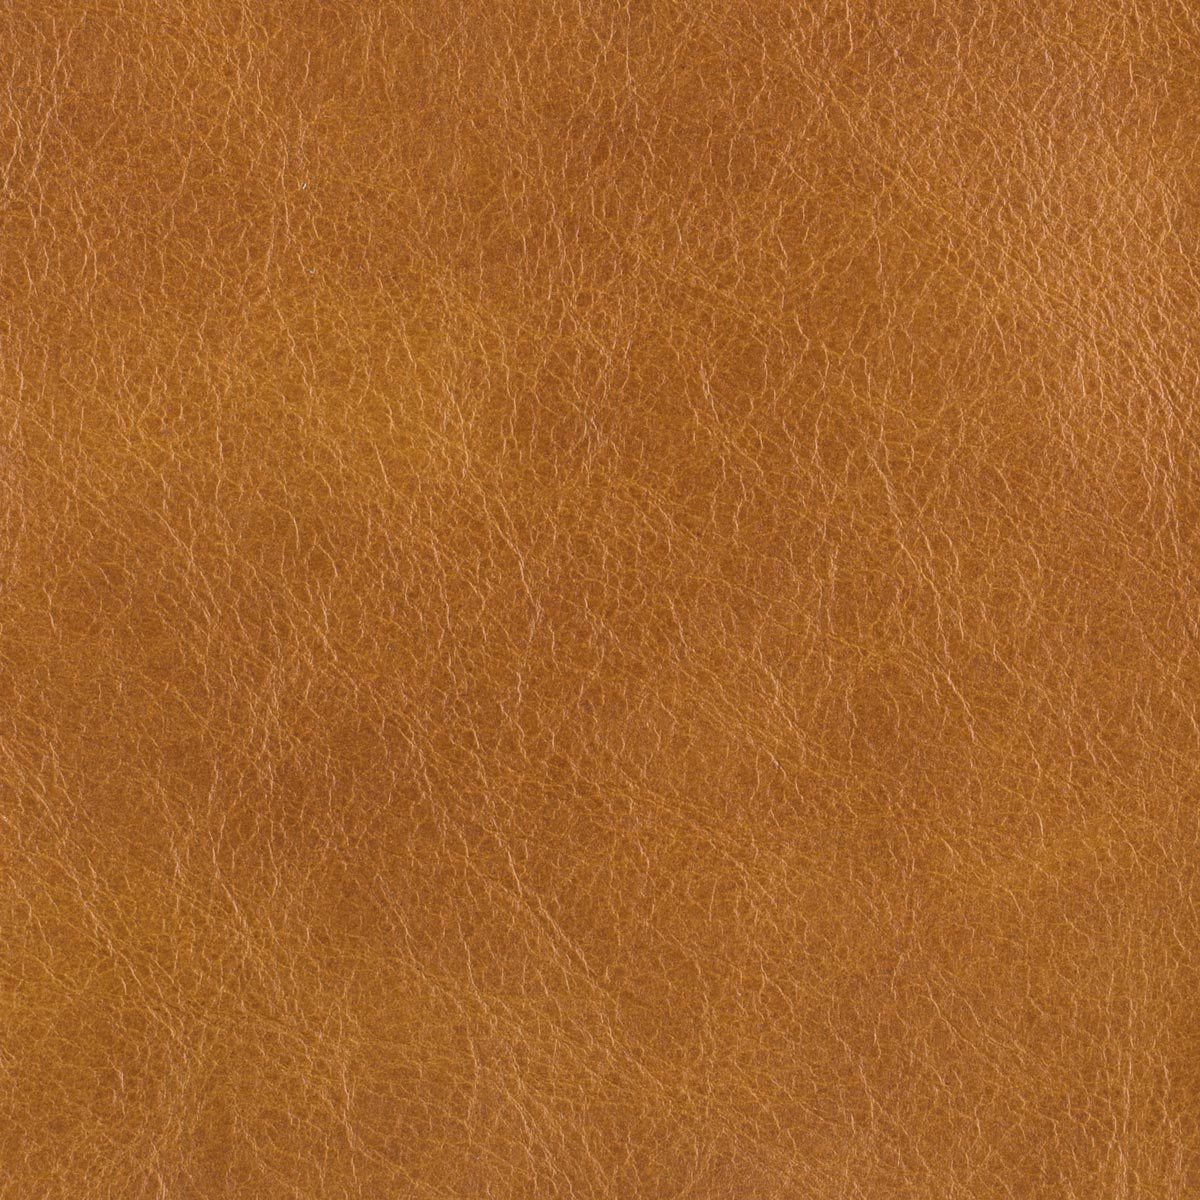 Antiquity - Top Grain Distressed Leather - Jamie Stern Design